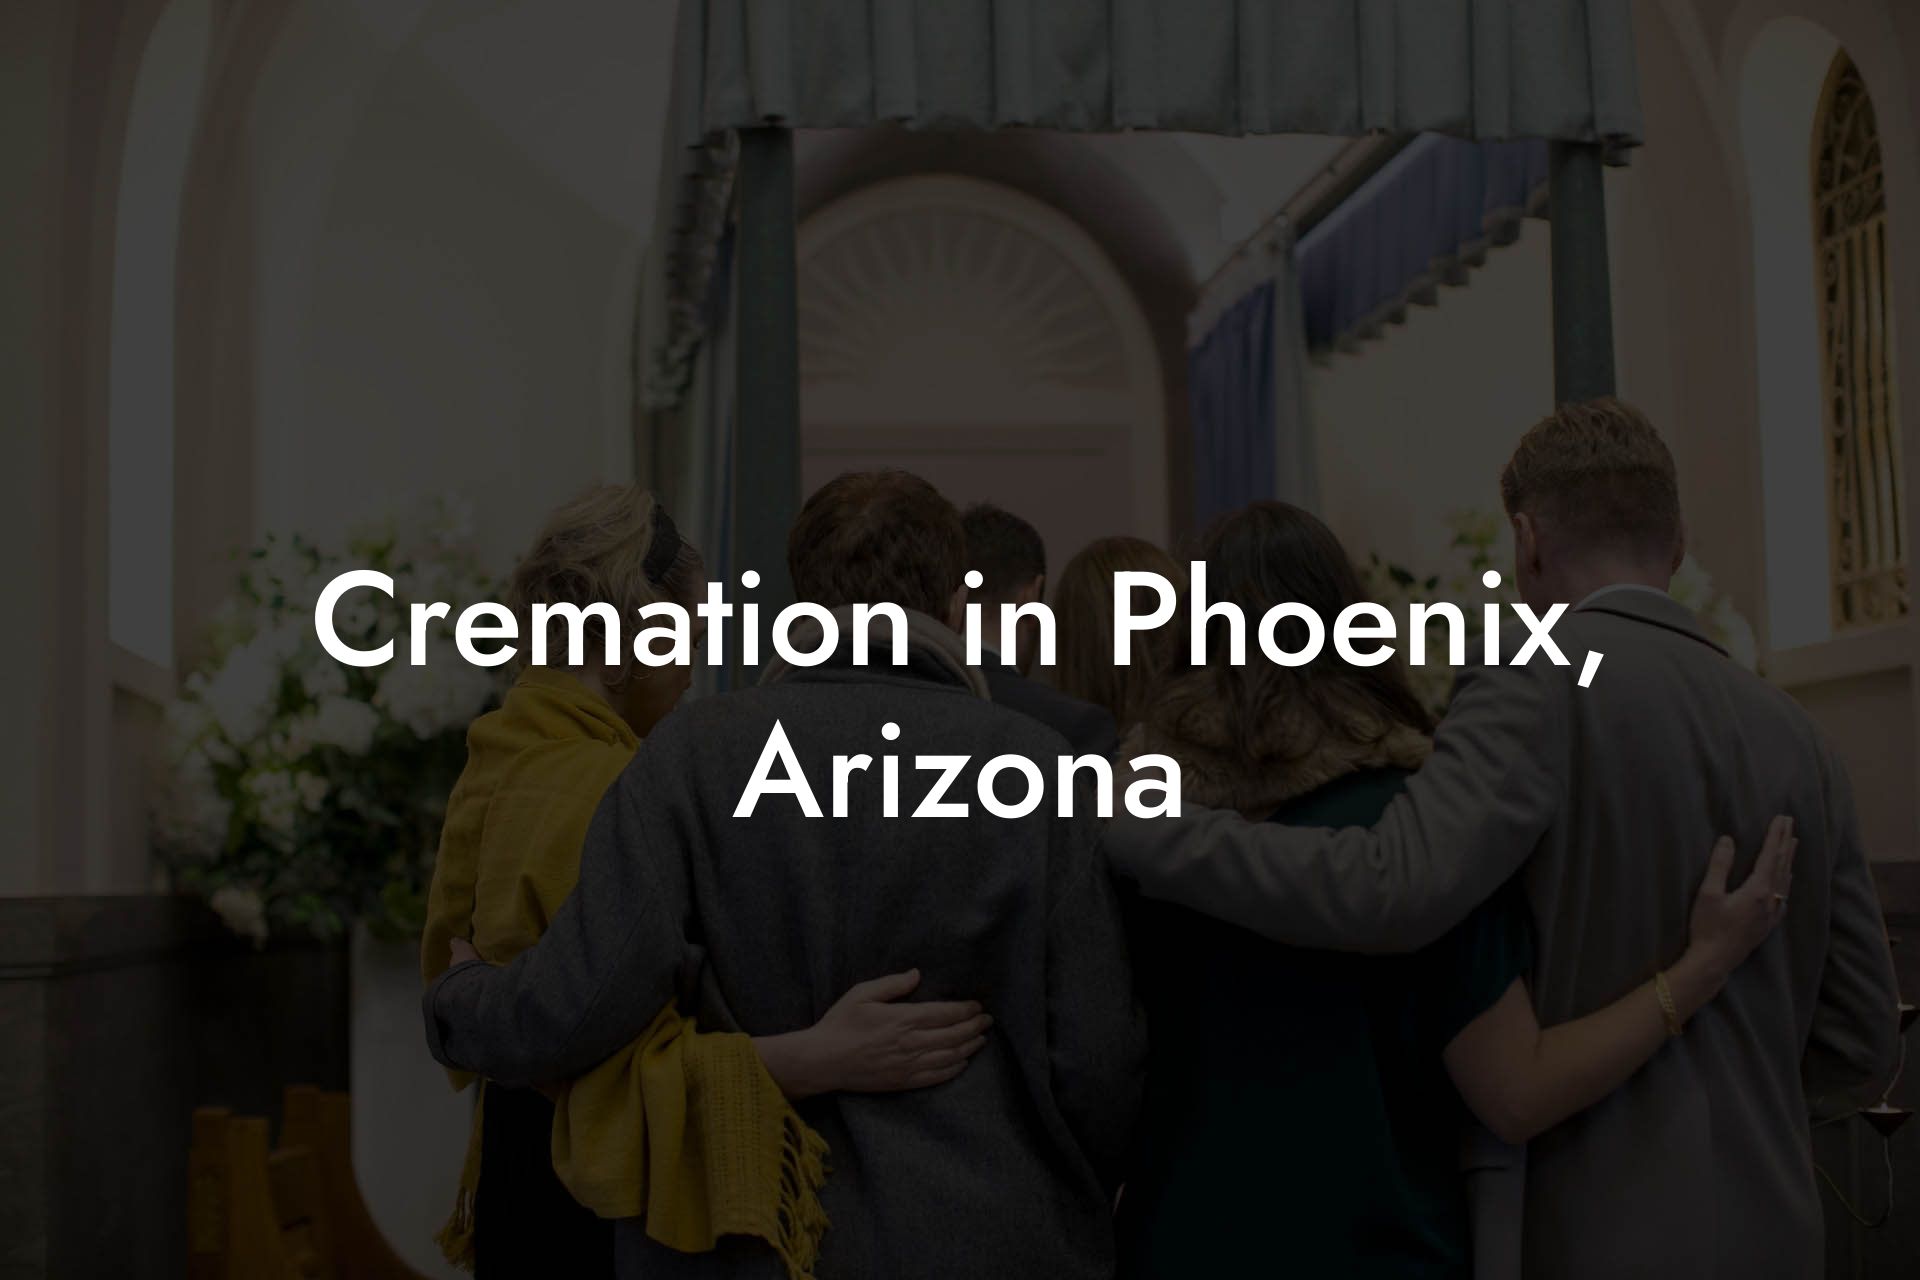 Cremation in Phoenix, Arizona